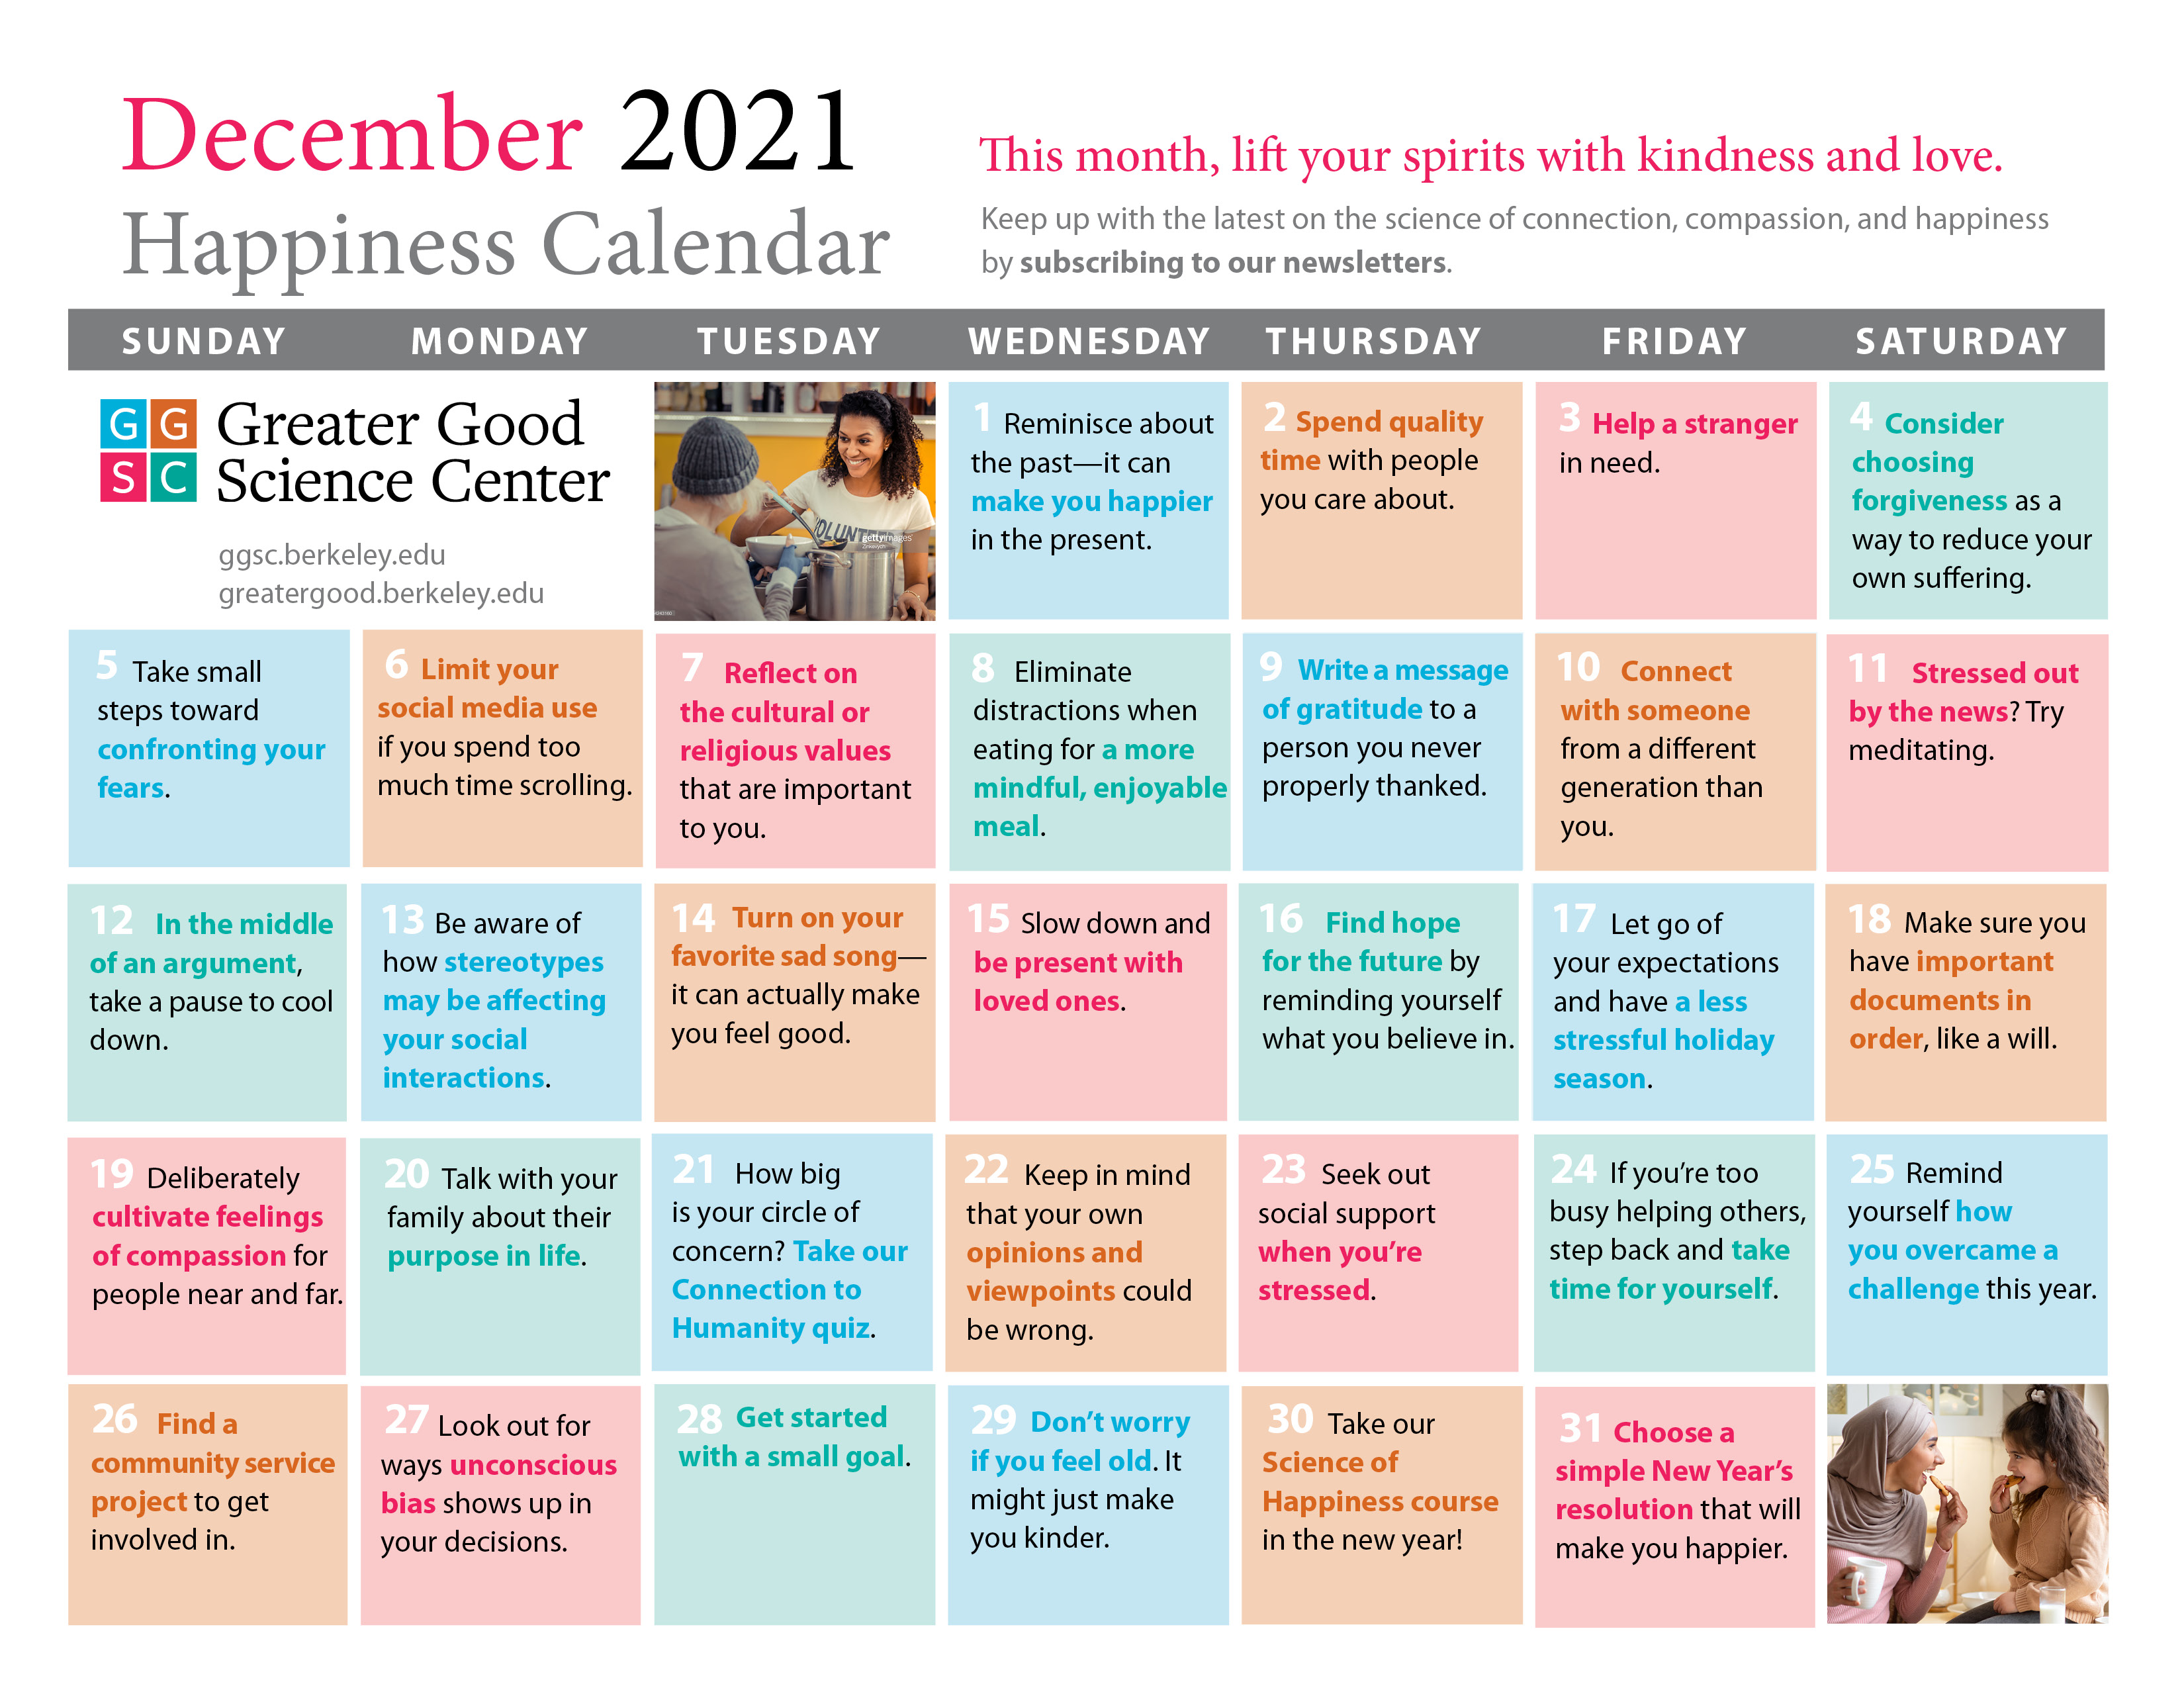 November happiness calendar